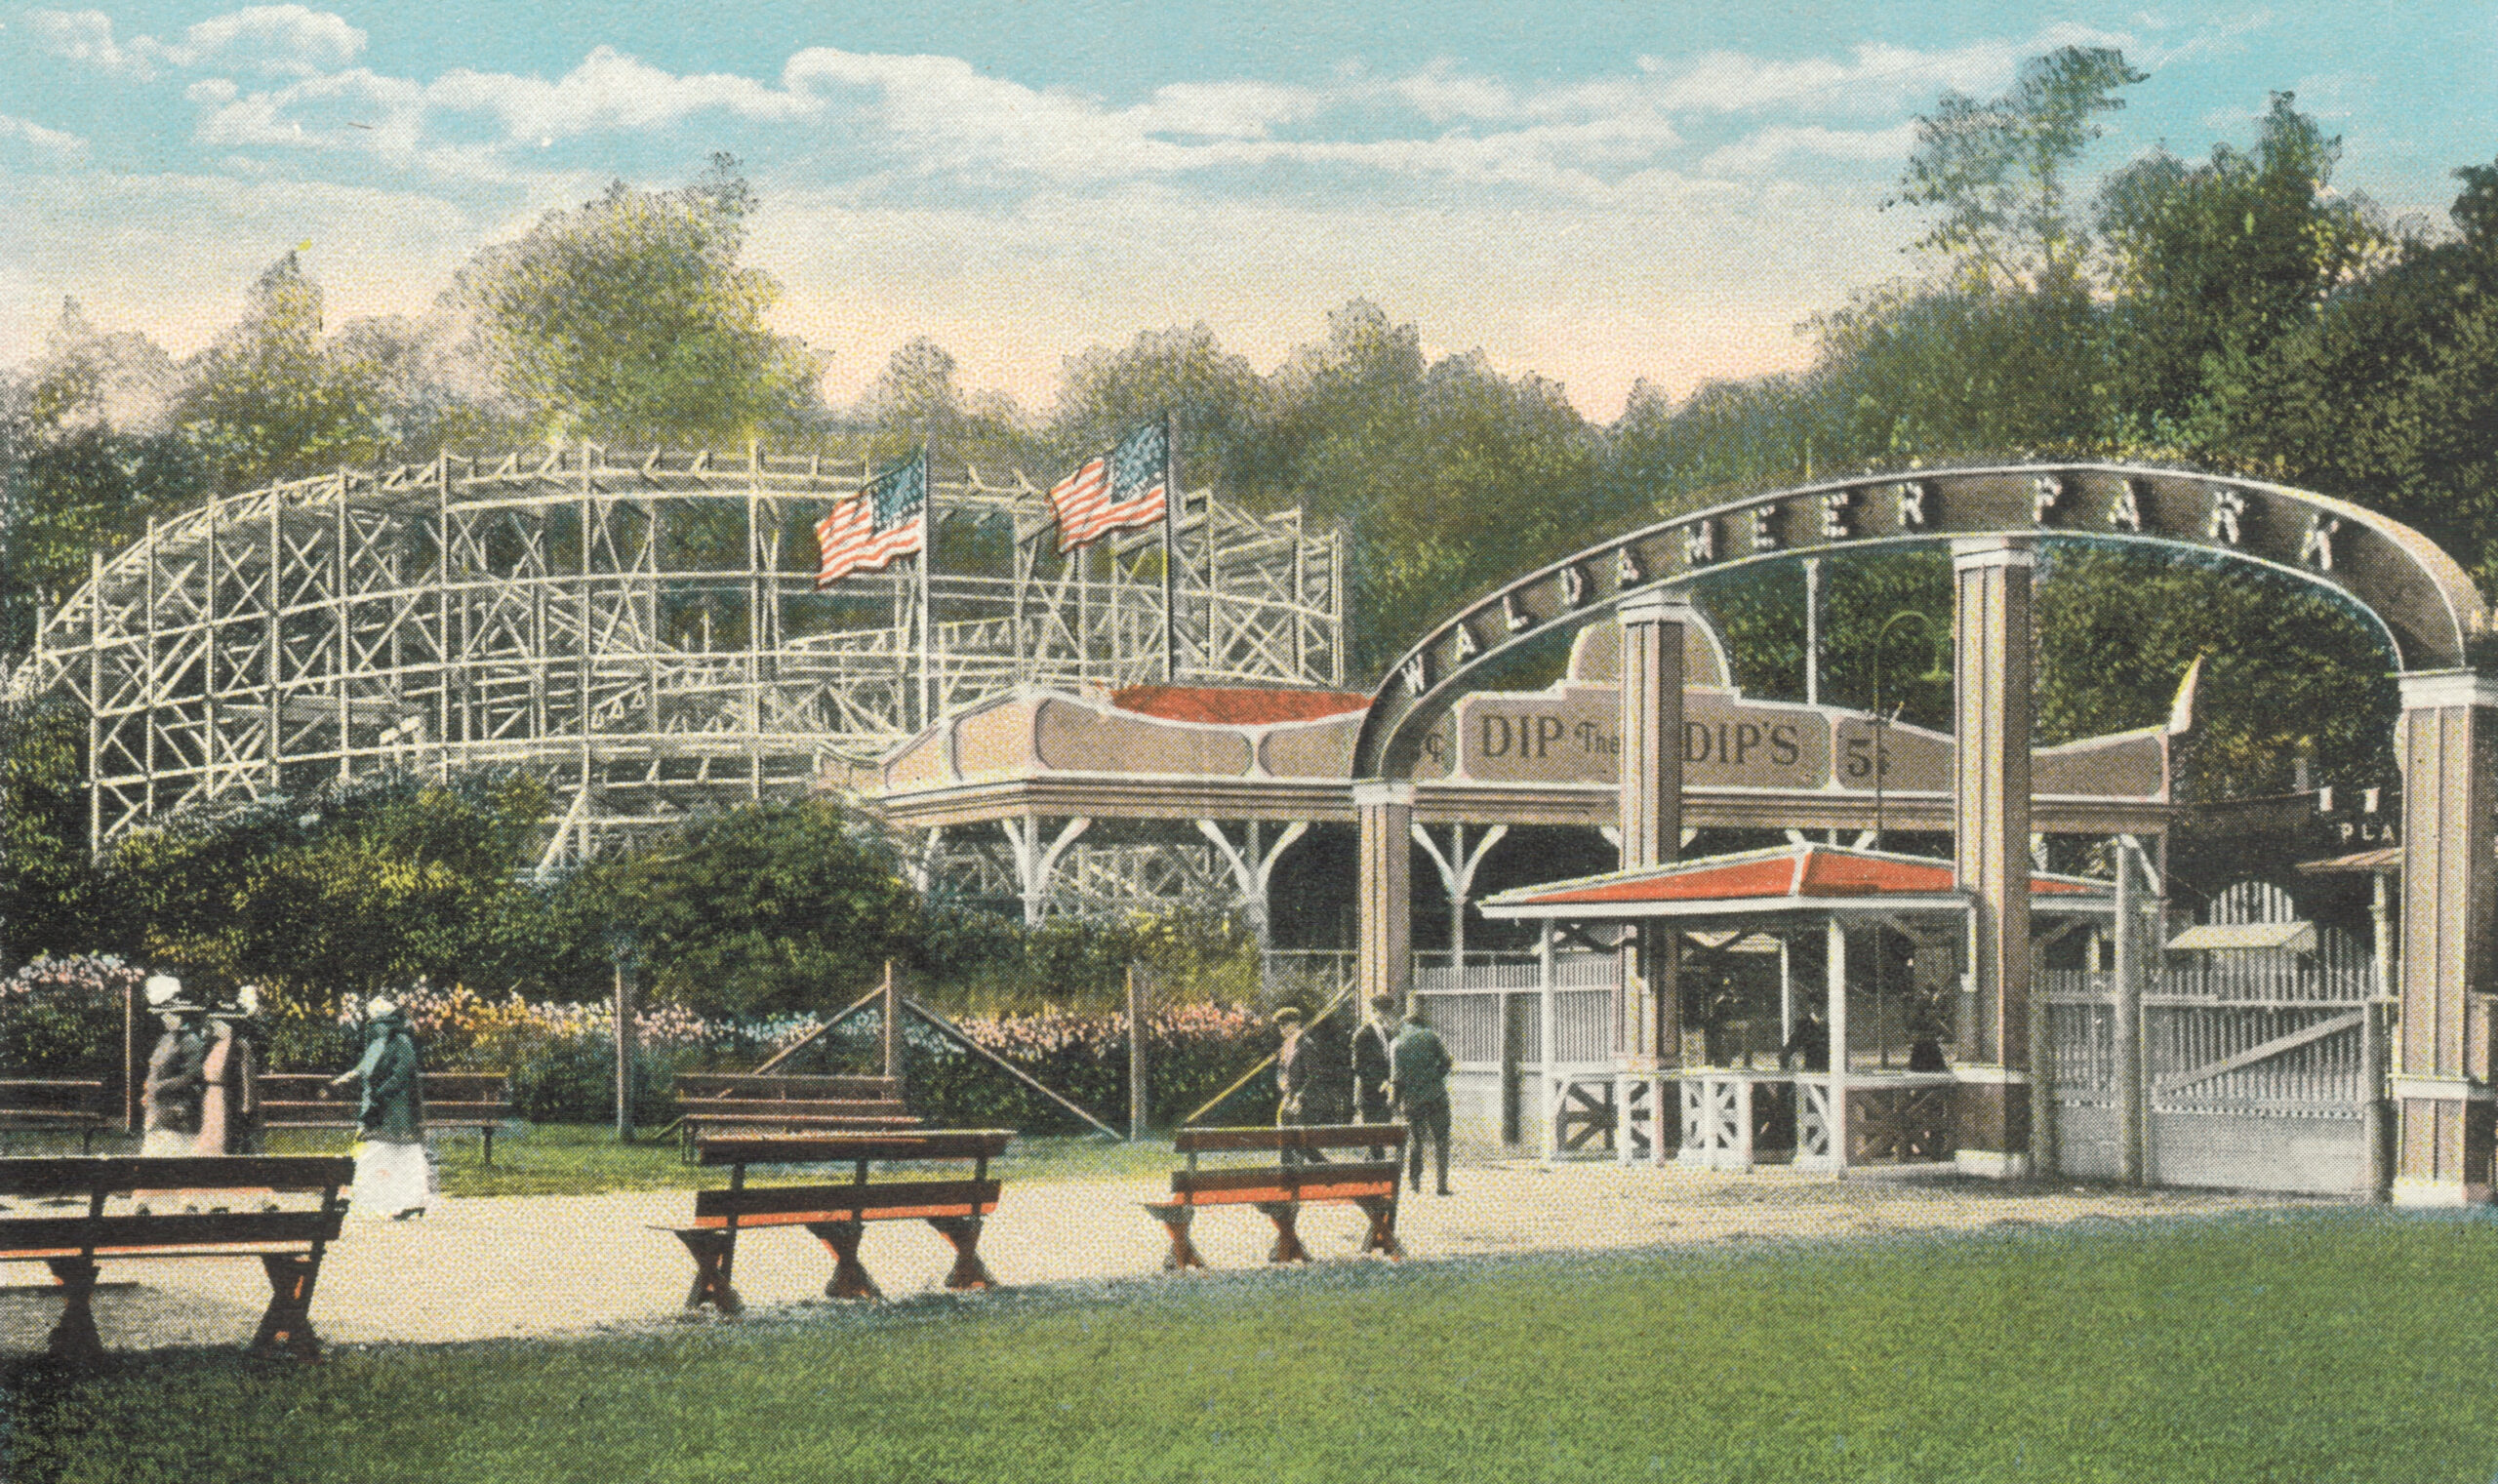 Postcard image of the Dip the Dips roller coaster at Waldameer.